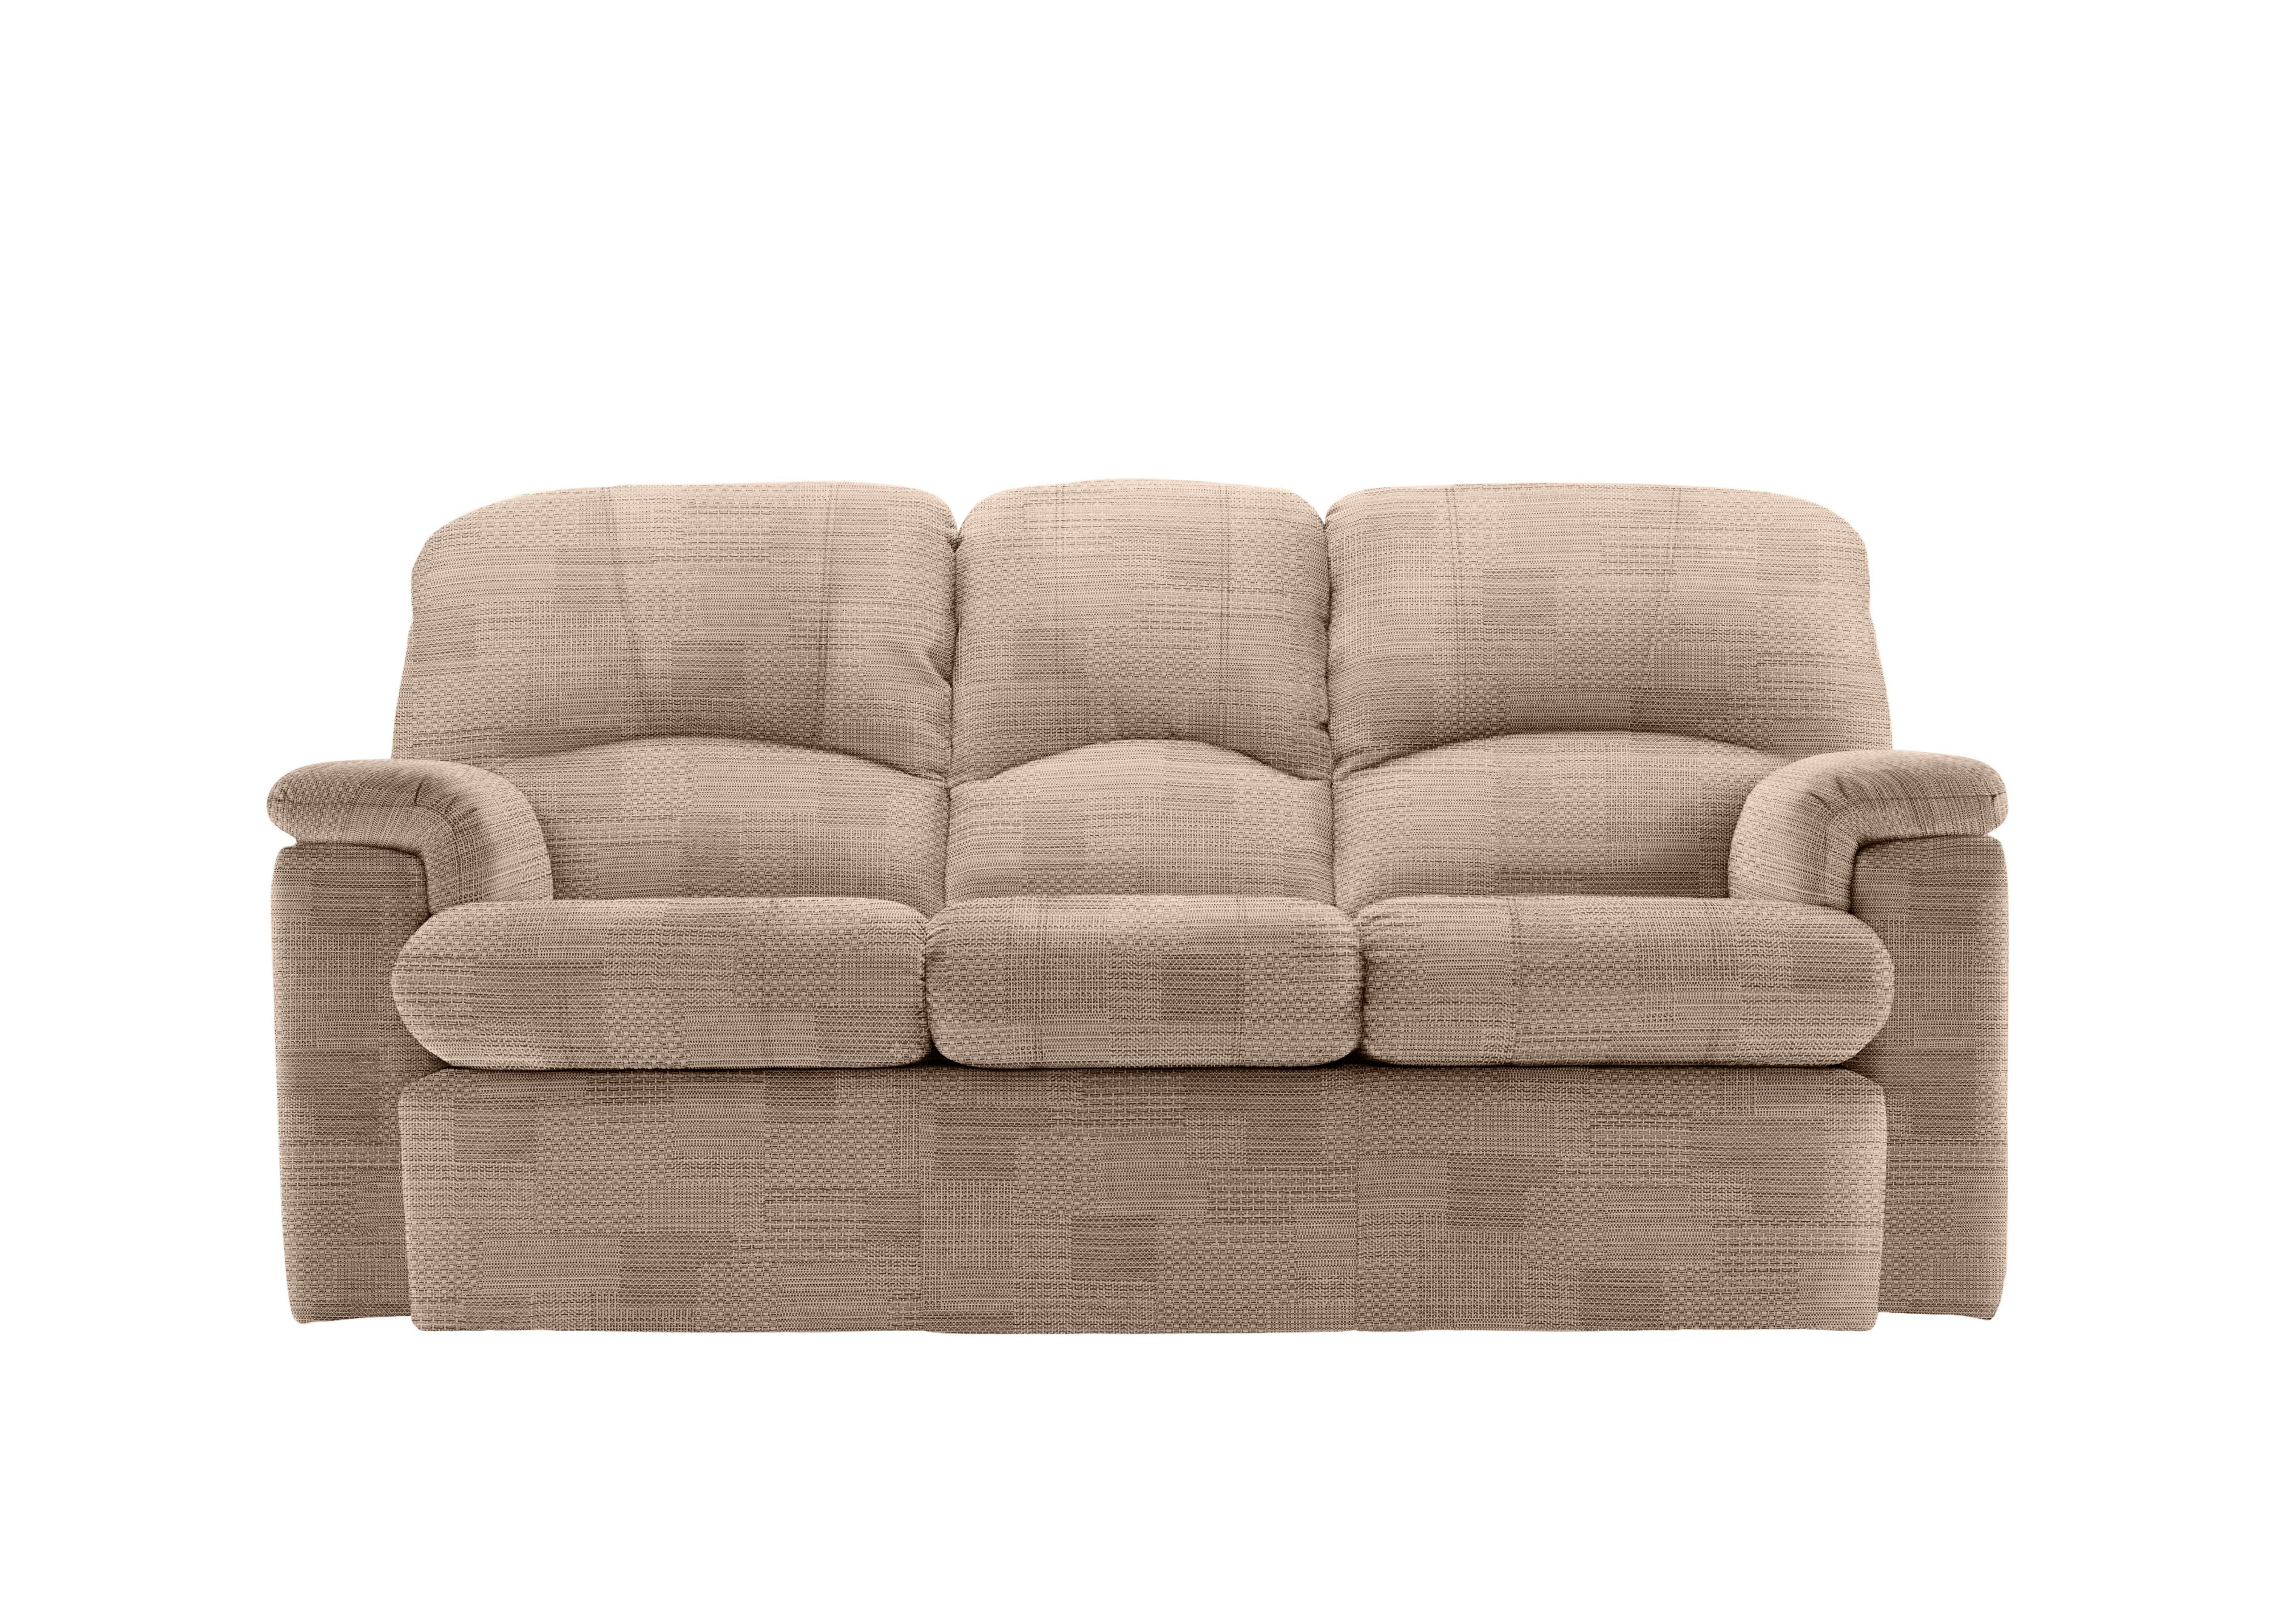 Chloe Small Fabric 3 Seater Sofa in A800 Faro Sand on Furniture Village